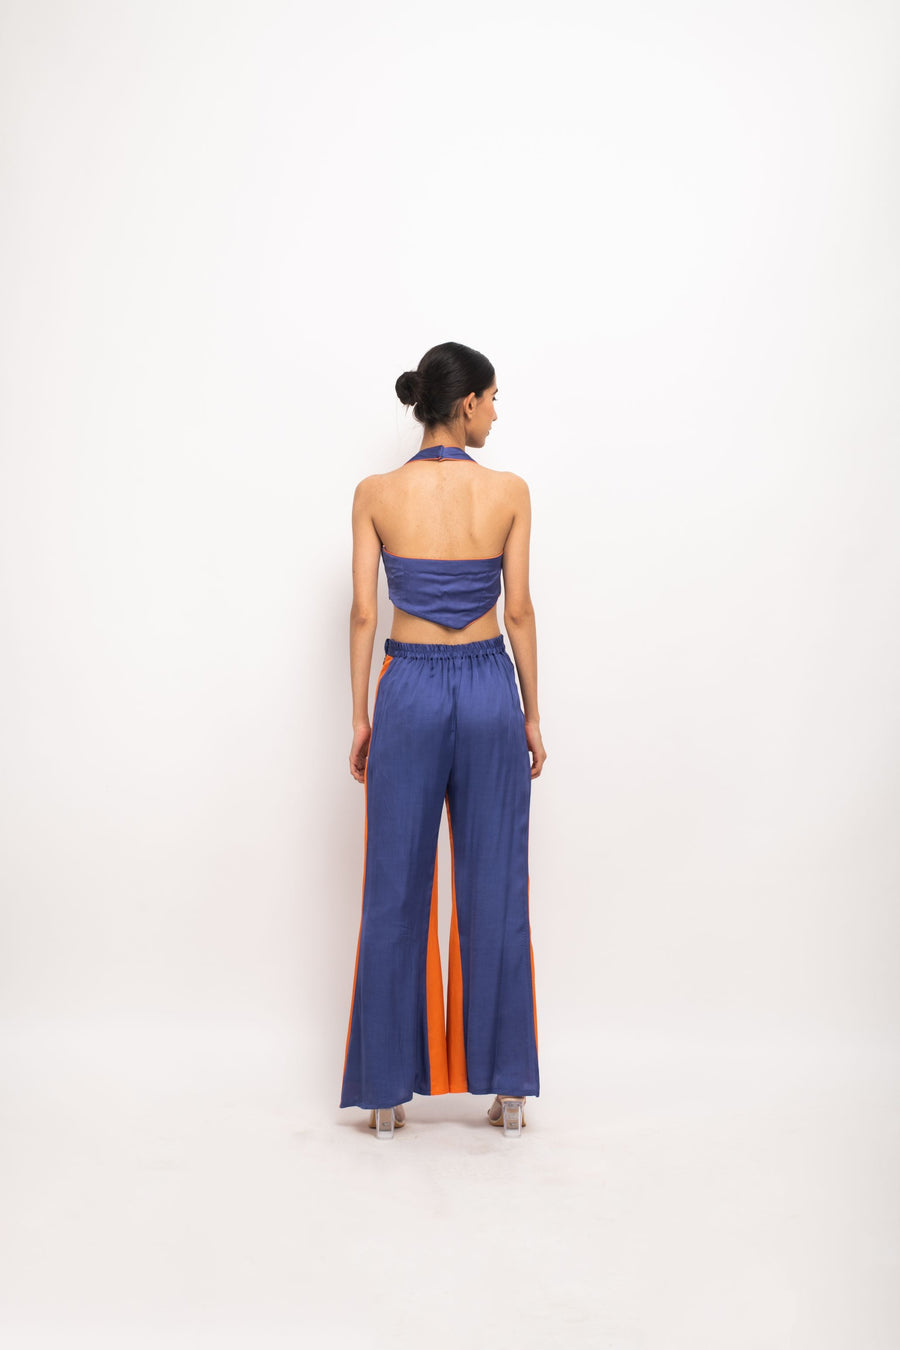 A Model Wearing Blue Bemberg Blue-Orange Halter Neck Set, curated by Only Ethikal